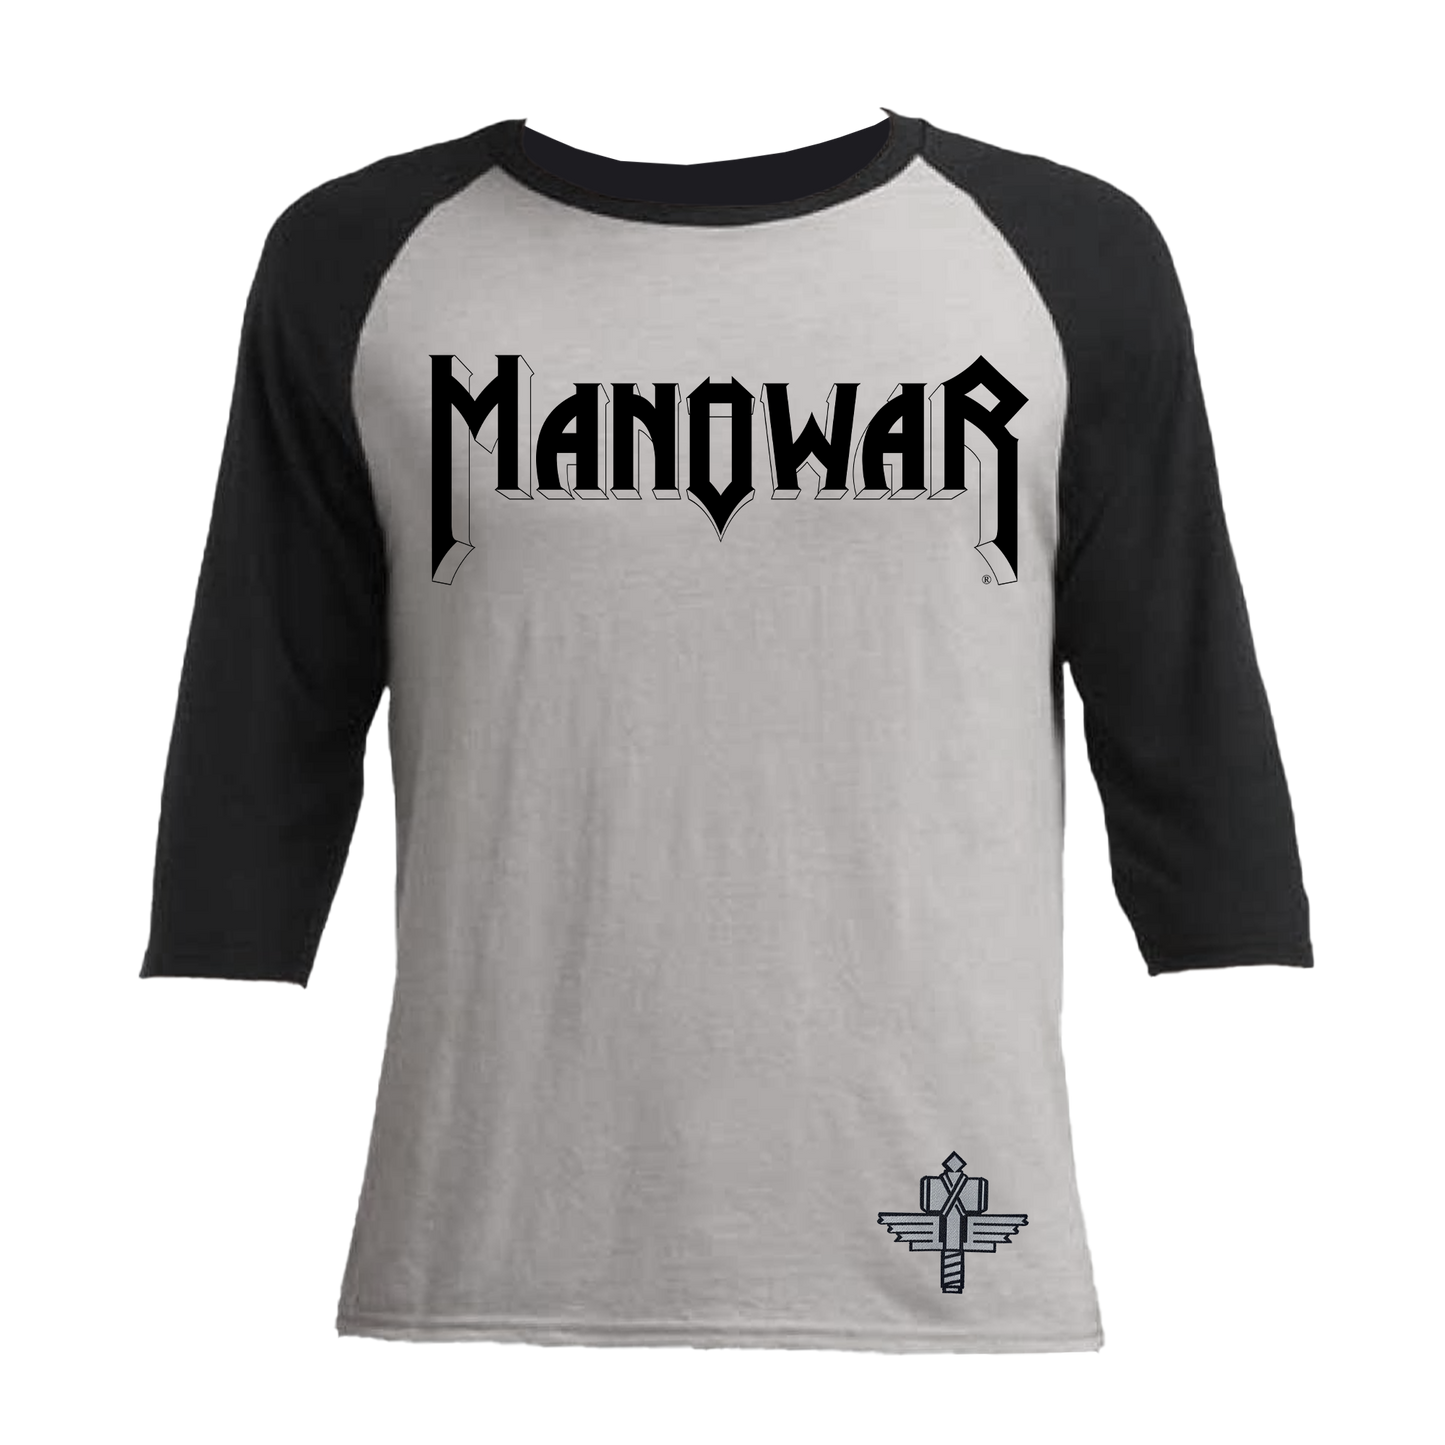 MANOWAR Shirt 3/4 Sleeve With MANOWAR Logo And SOTH Patch